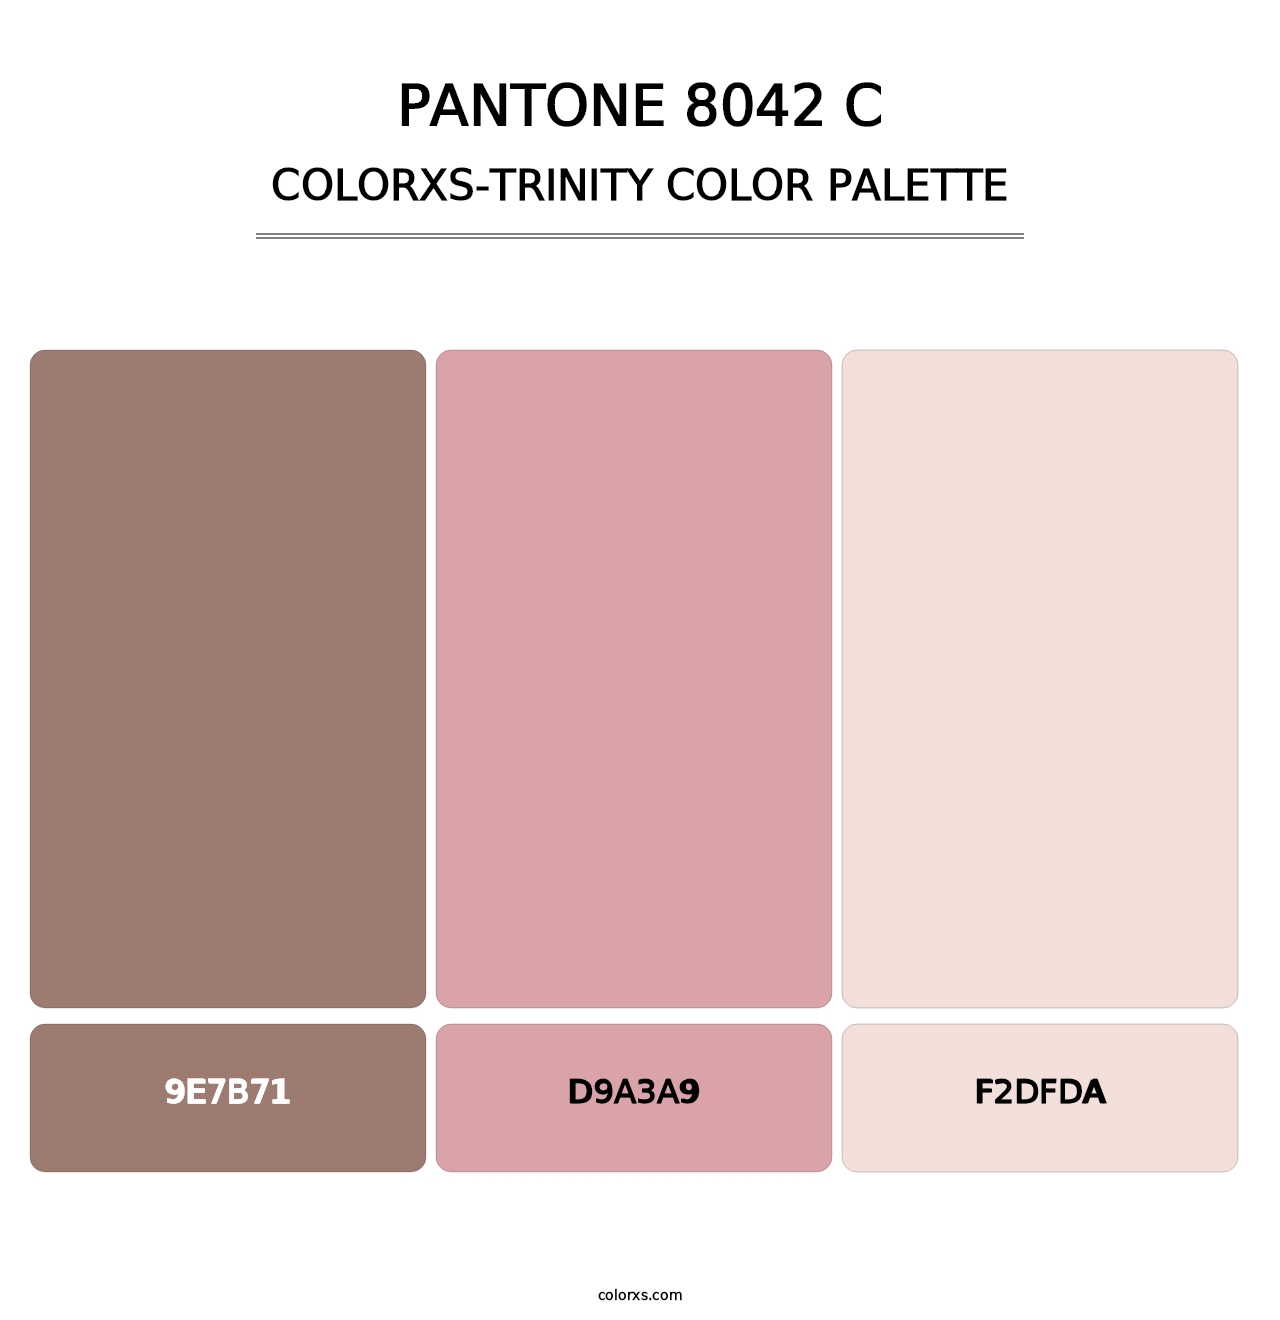 PANTONE 8042 C - Colorxs Trinity Palette